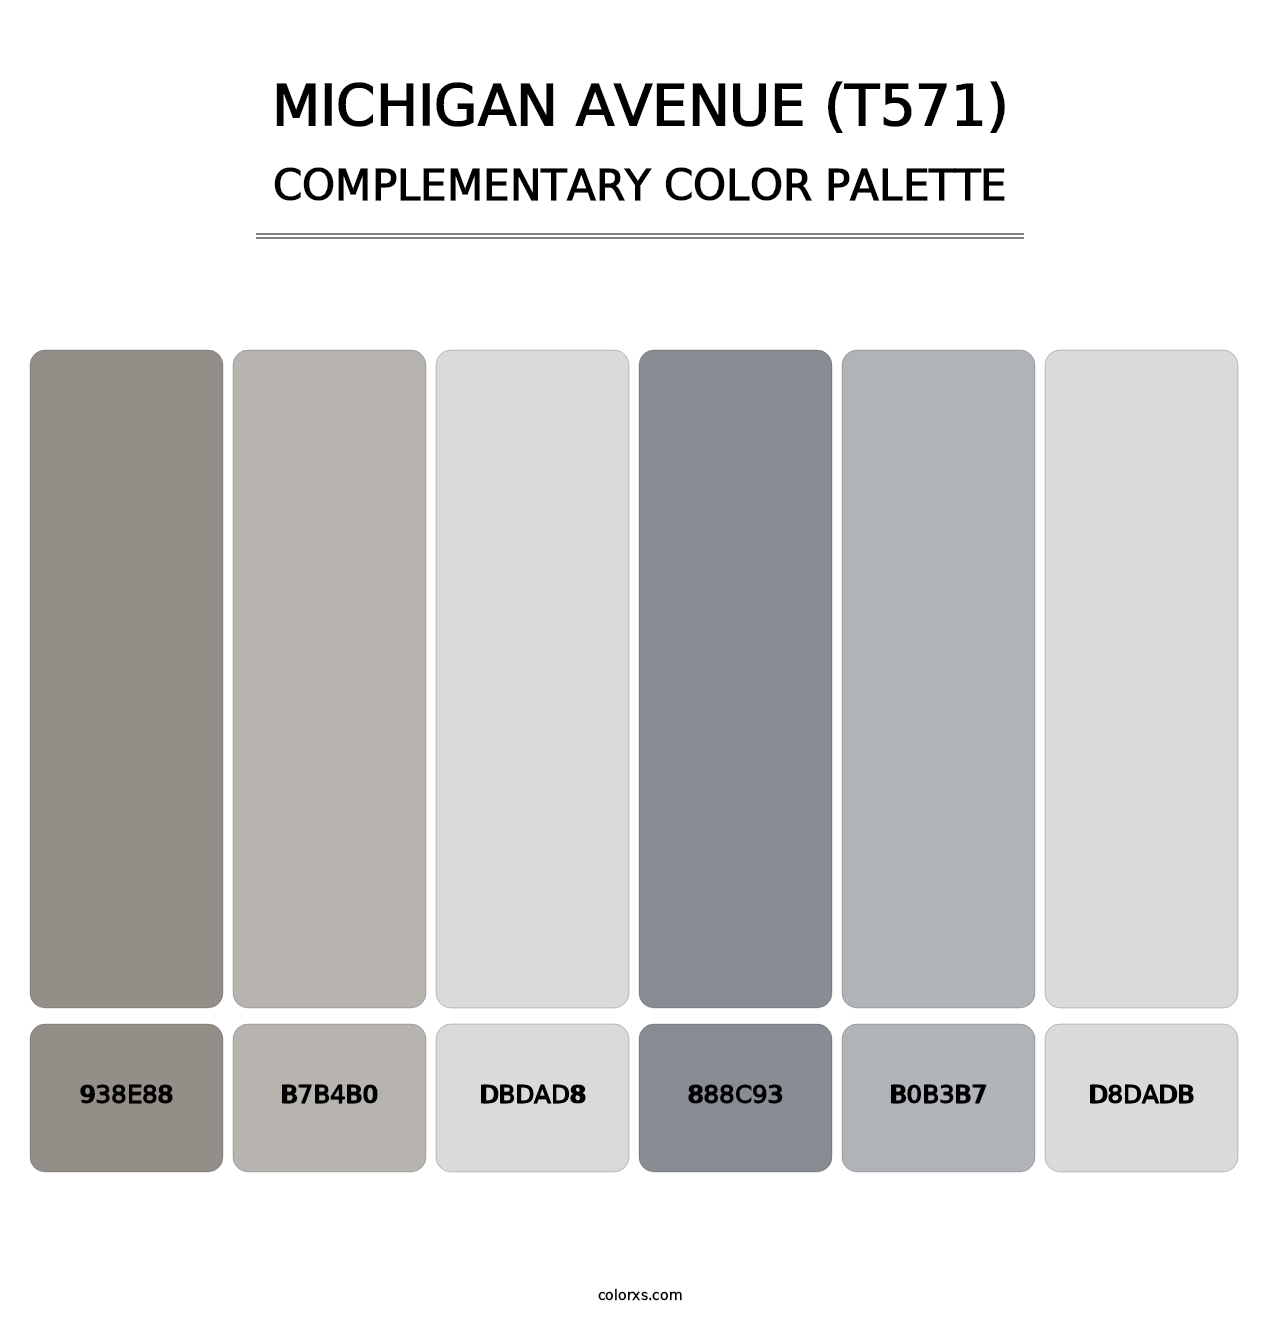 Michigan Avenue (T571) - Complementary Color Palette